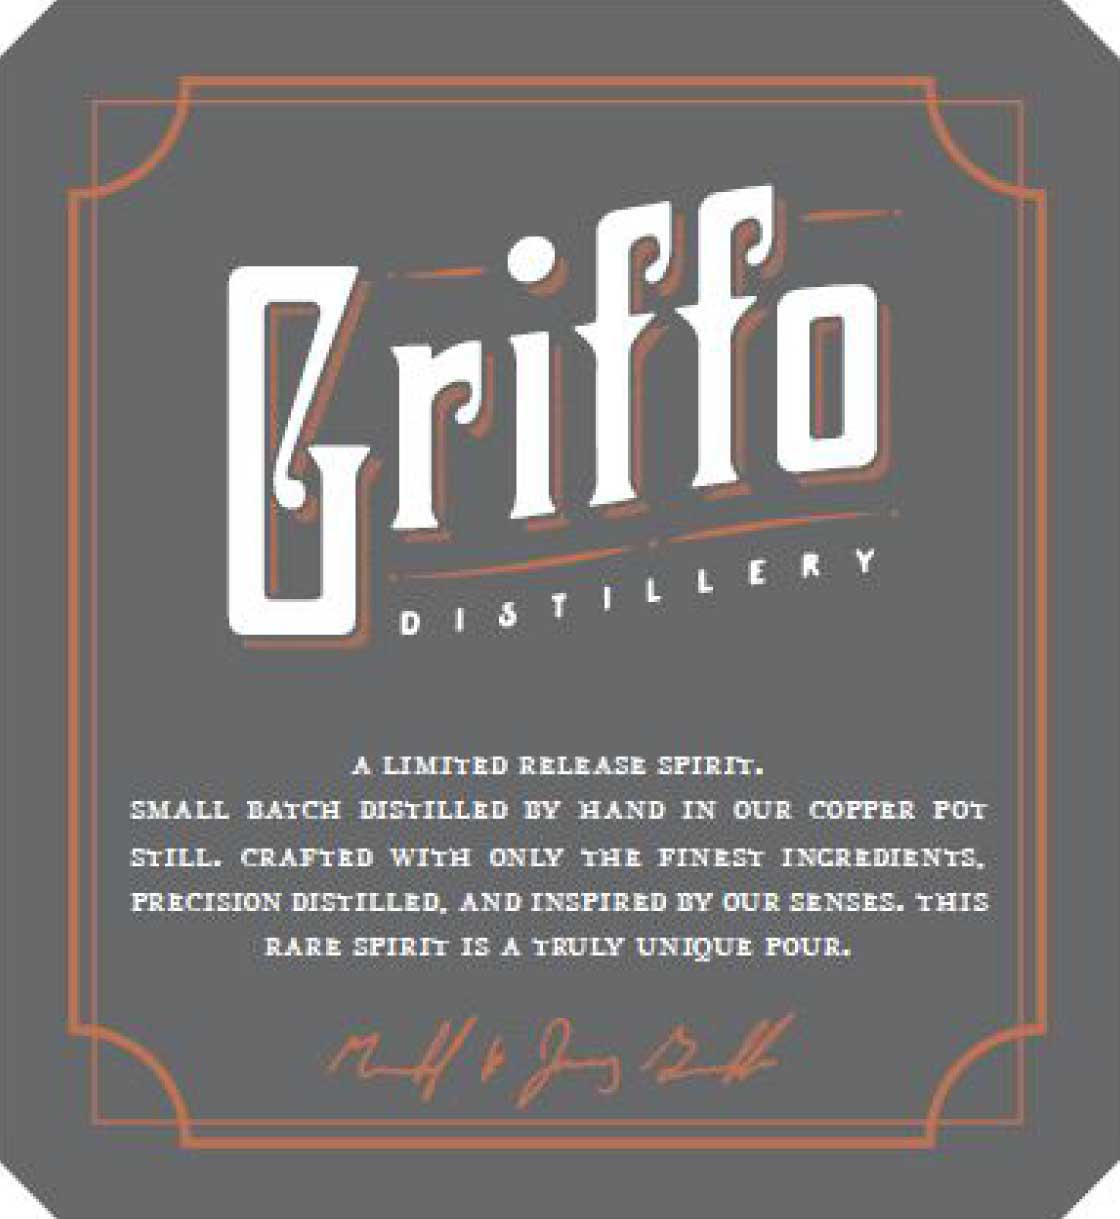 Griffo - Vodka  label